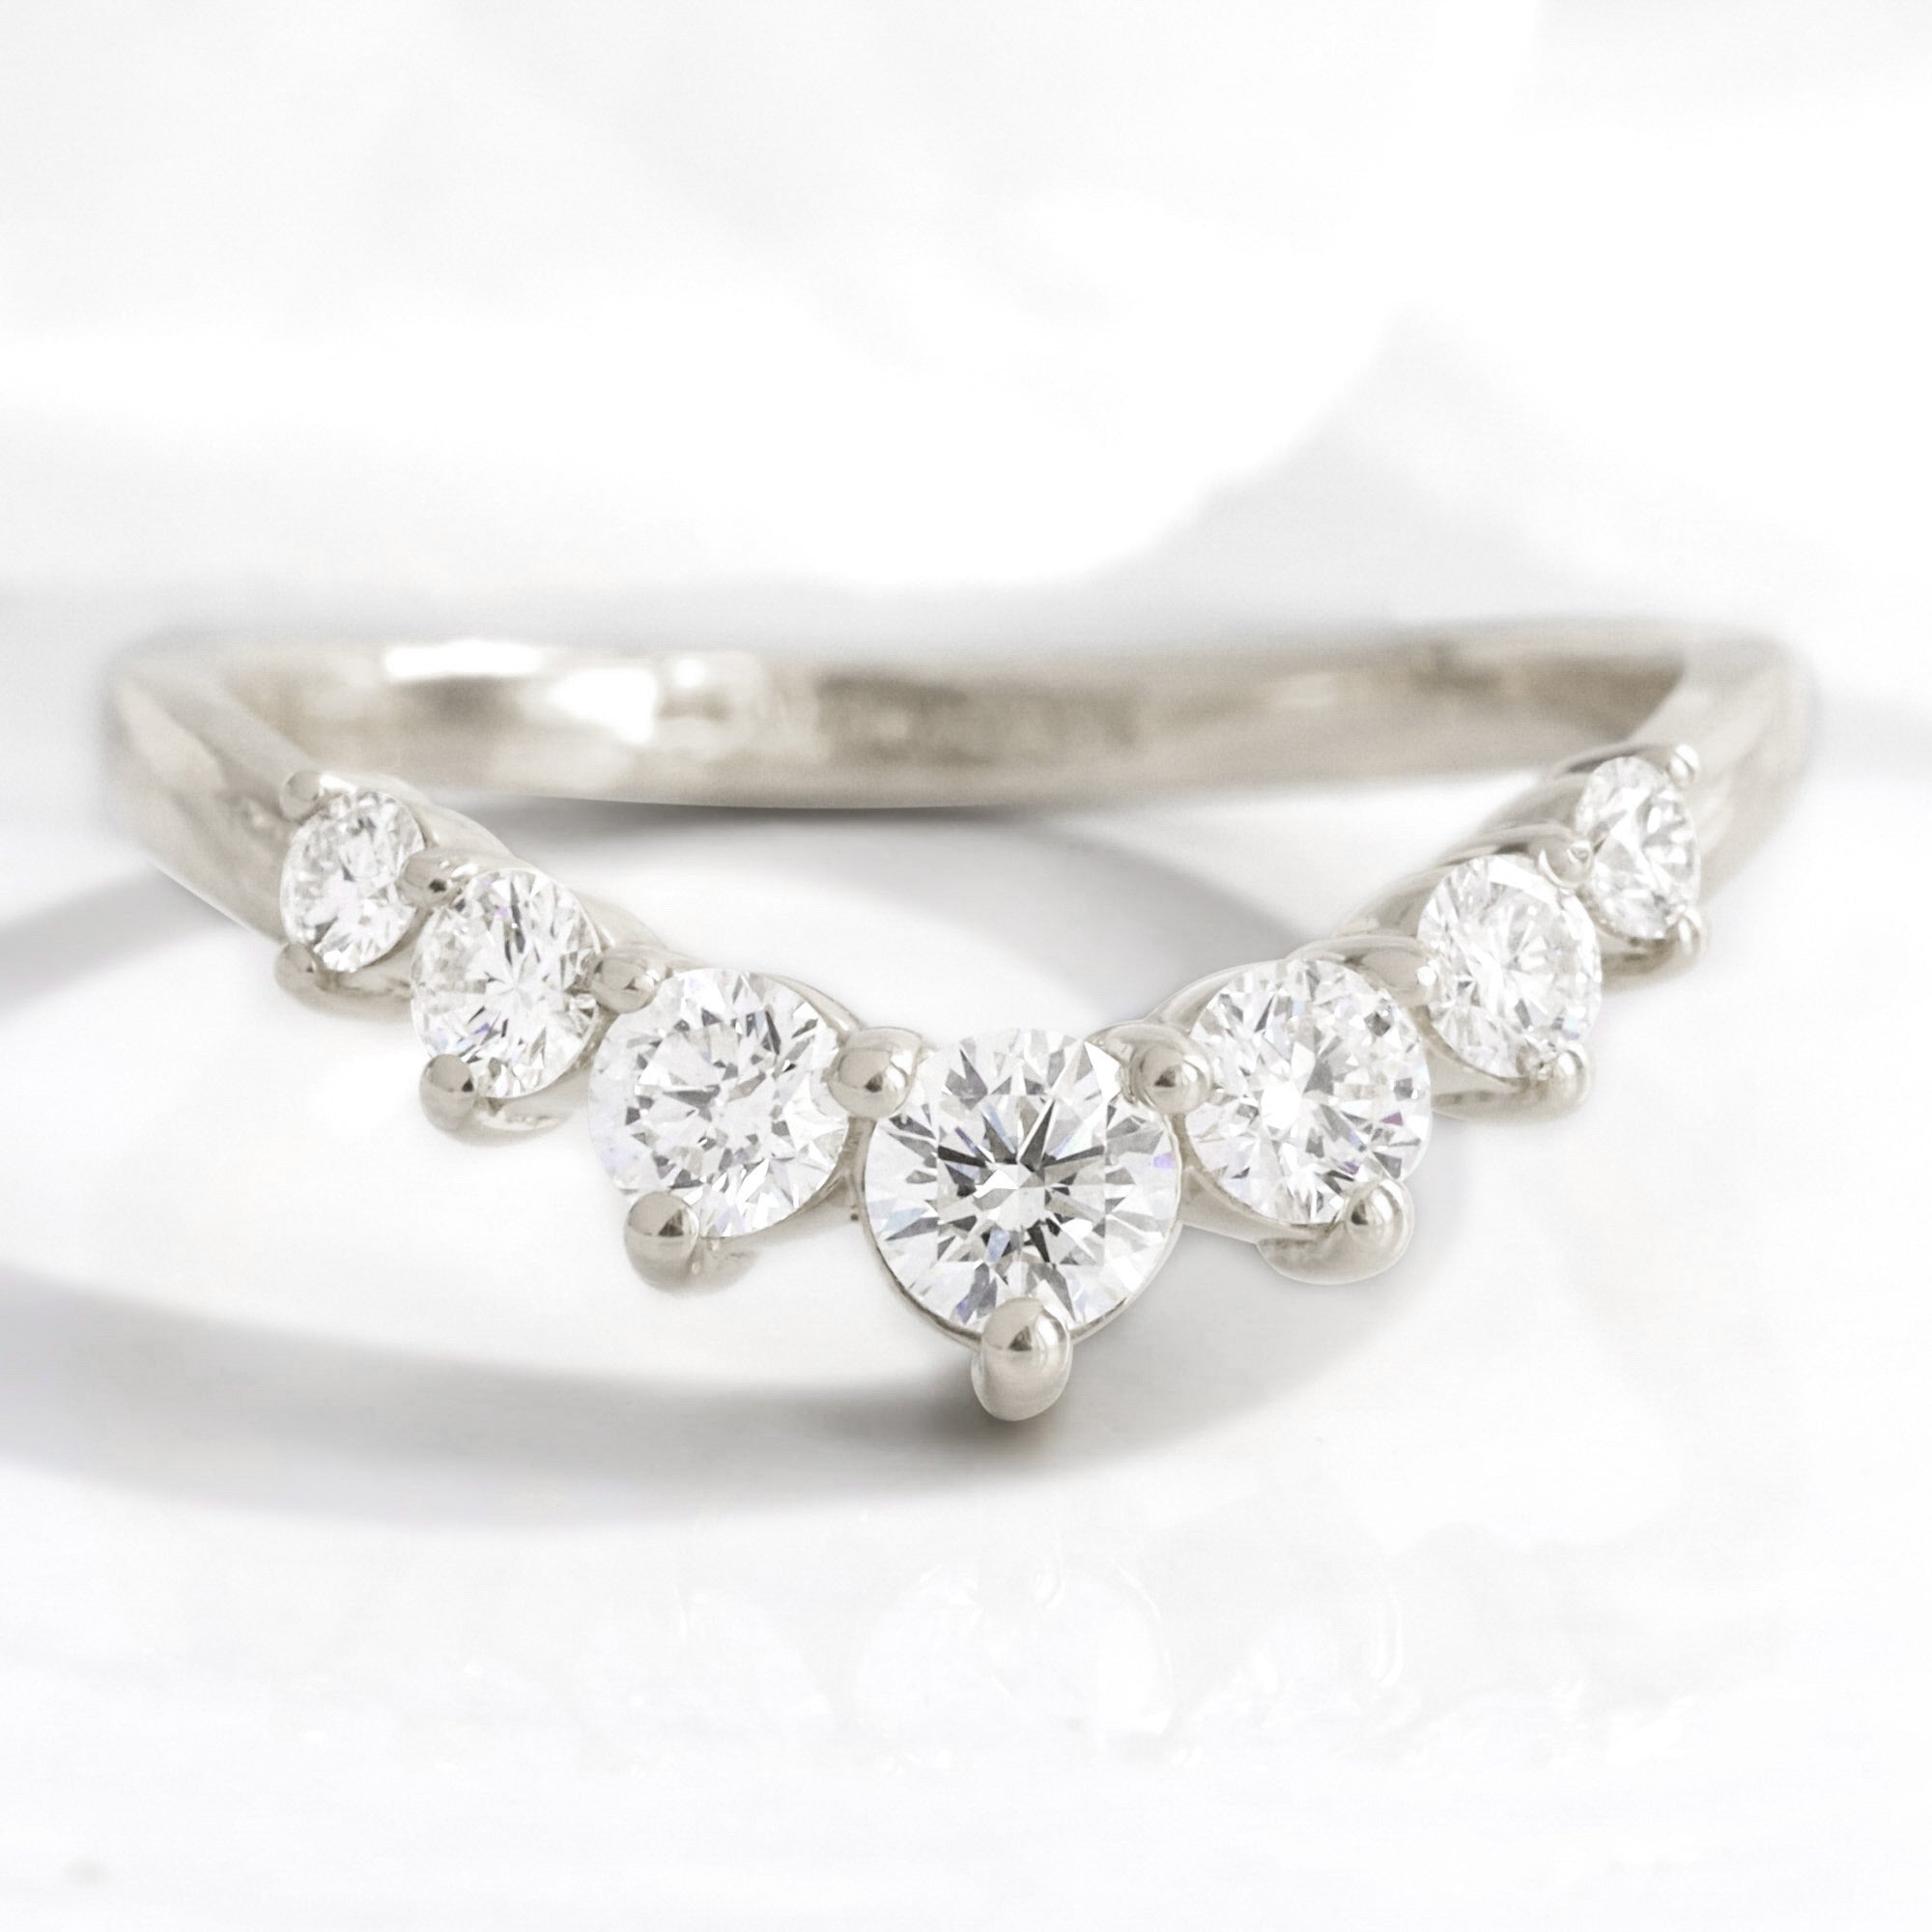 Large 7 diamond wedding ring white gold U shaped curved band la more design jewelry